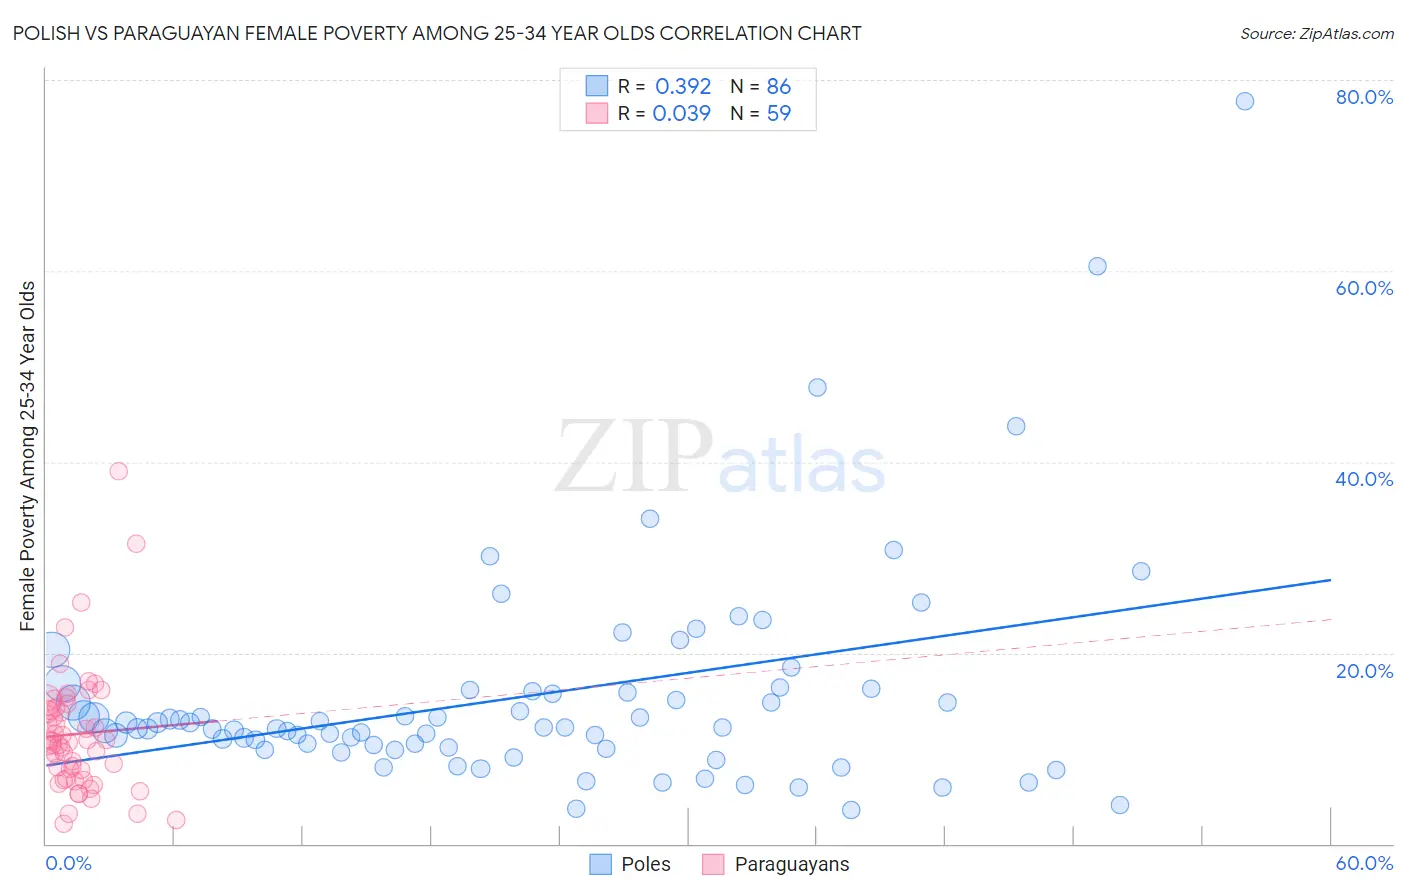 Polish vs Paraguayan Female Poverty Among 25-34 Year Olds